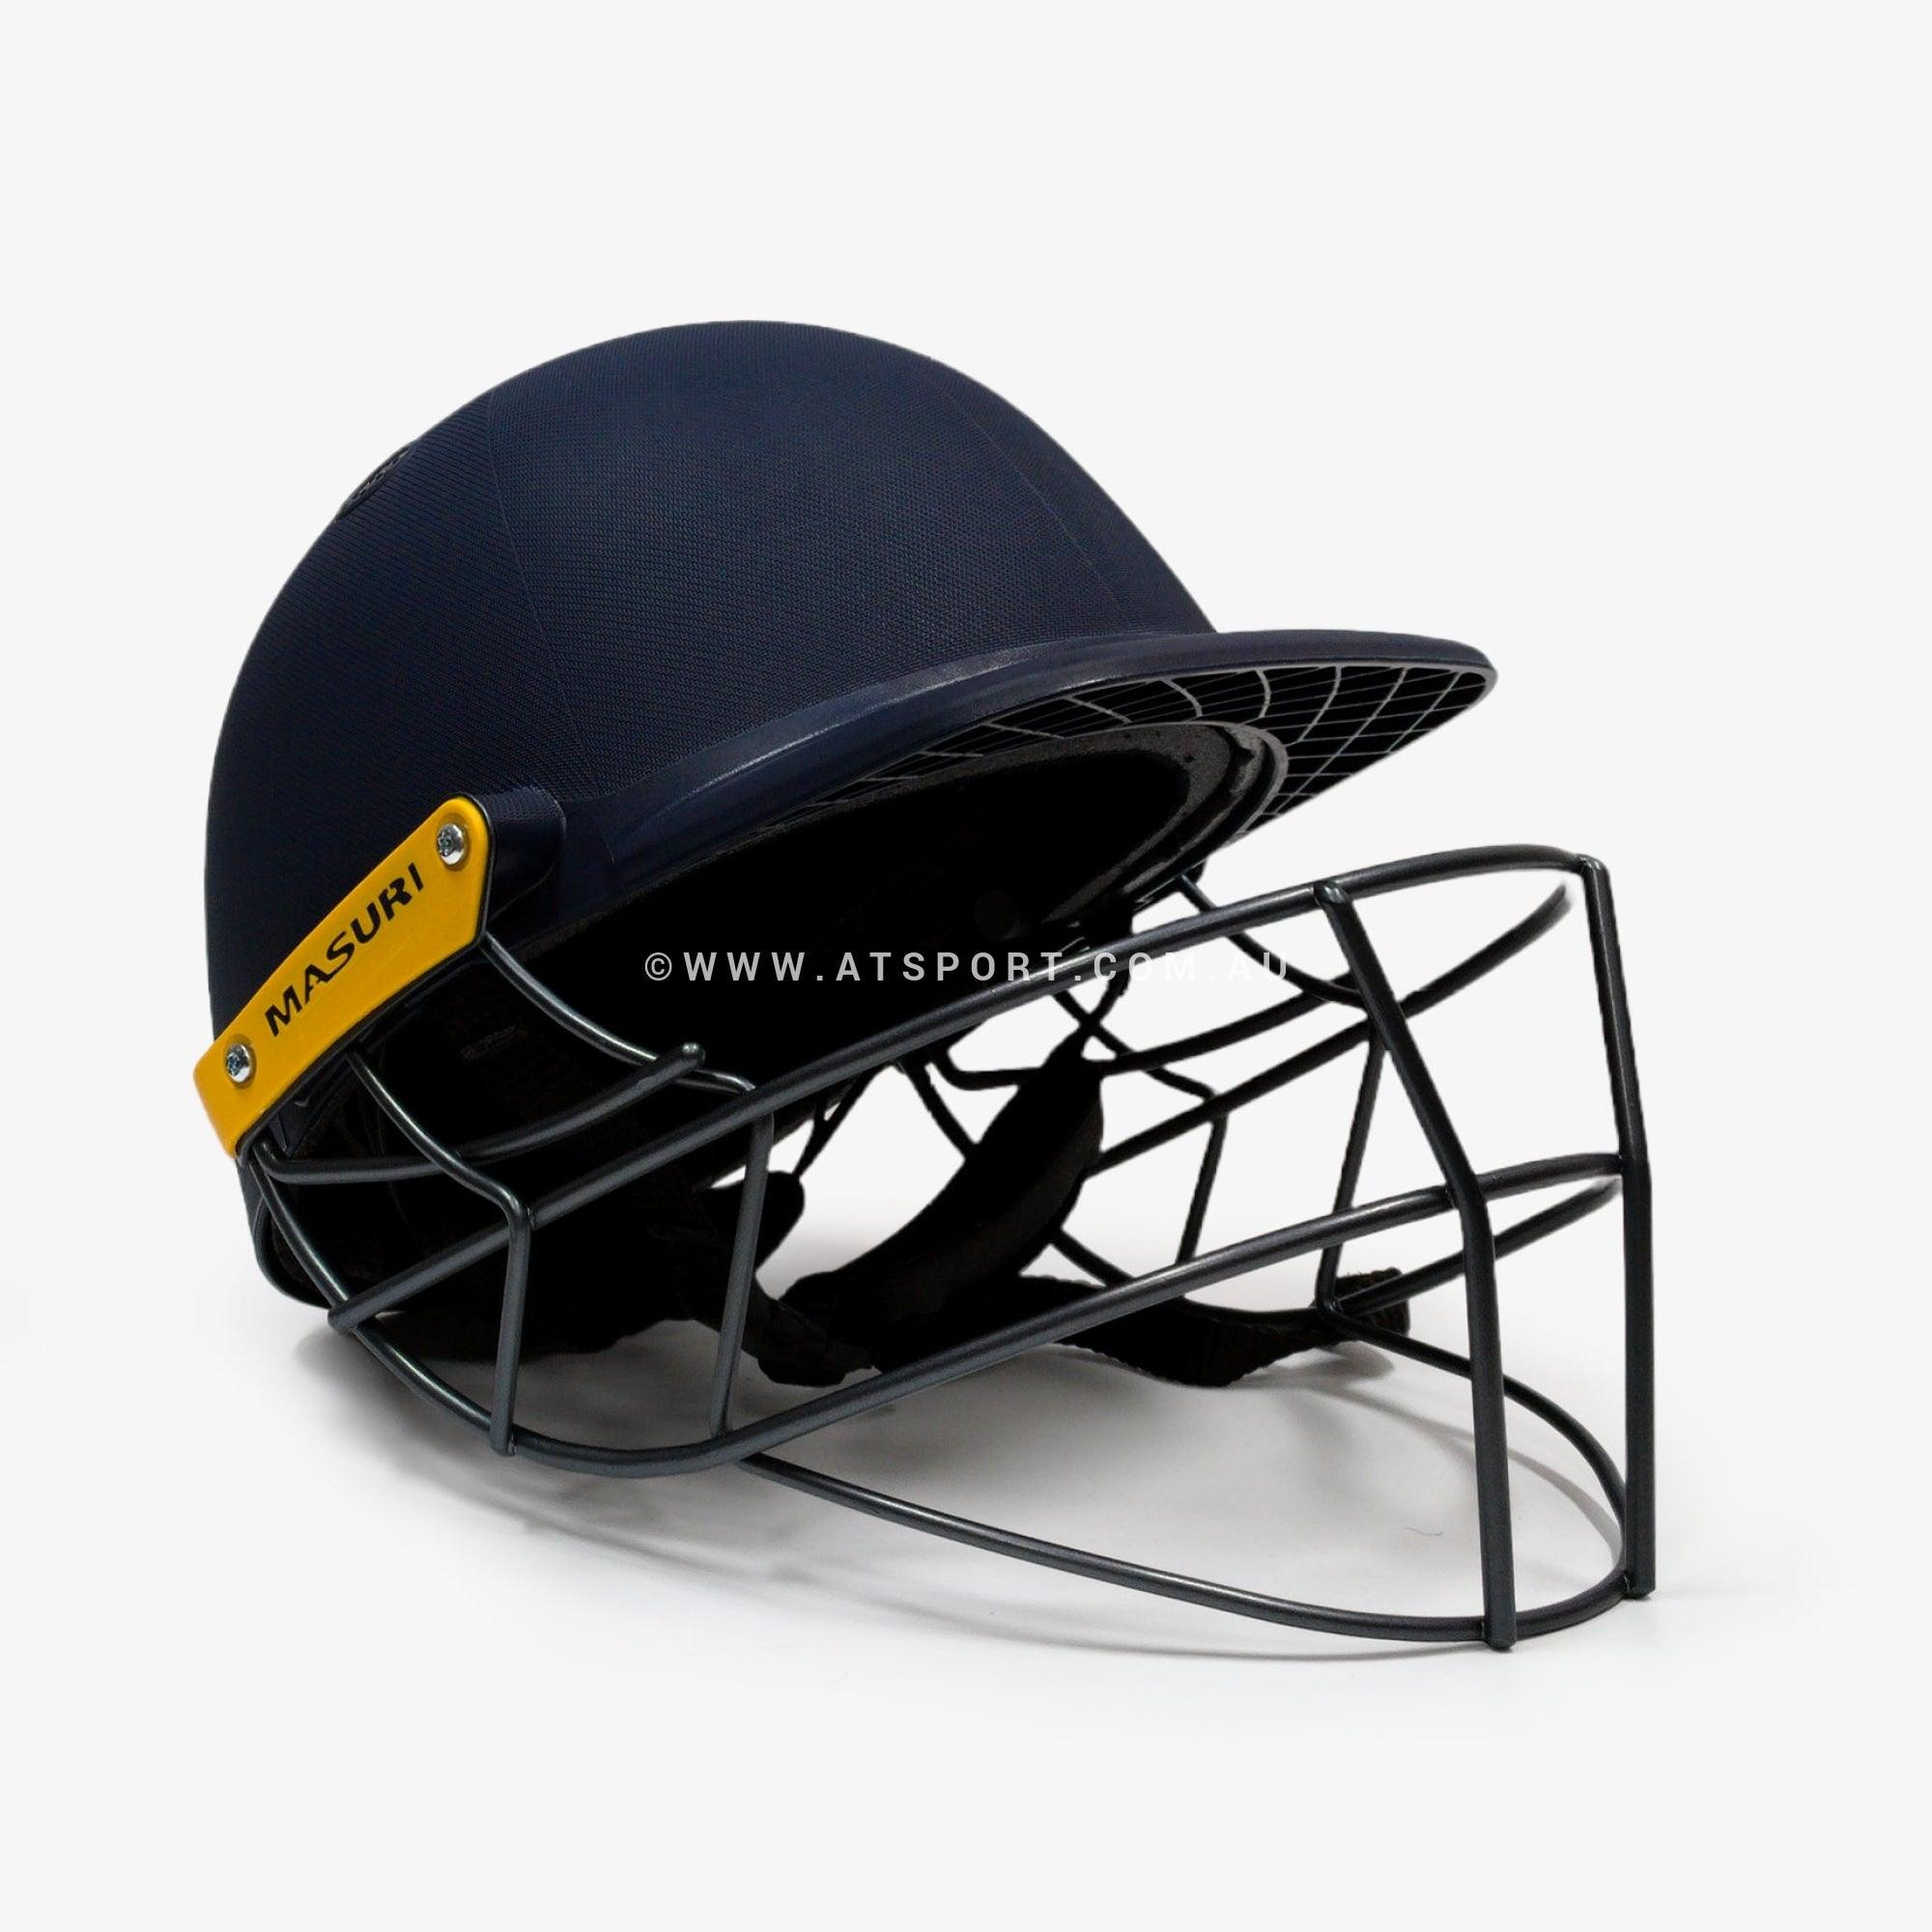 Masuri C LINE STEEL Grille Cricket Helmet - AT Sports